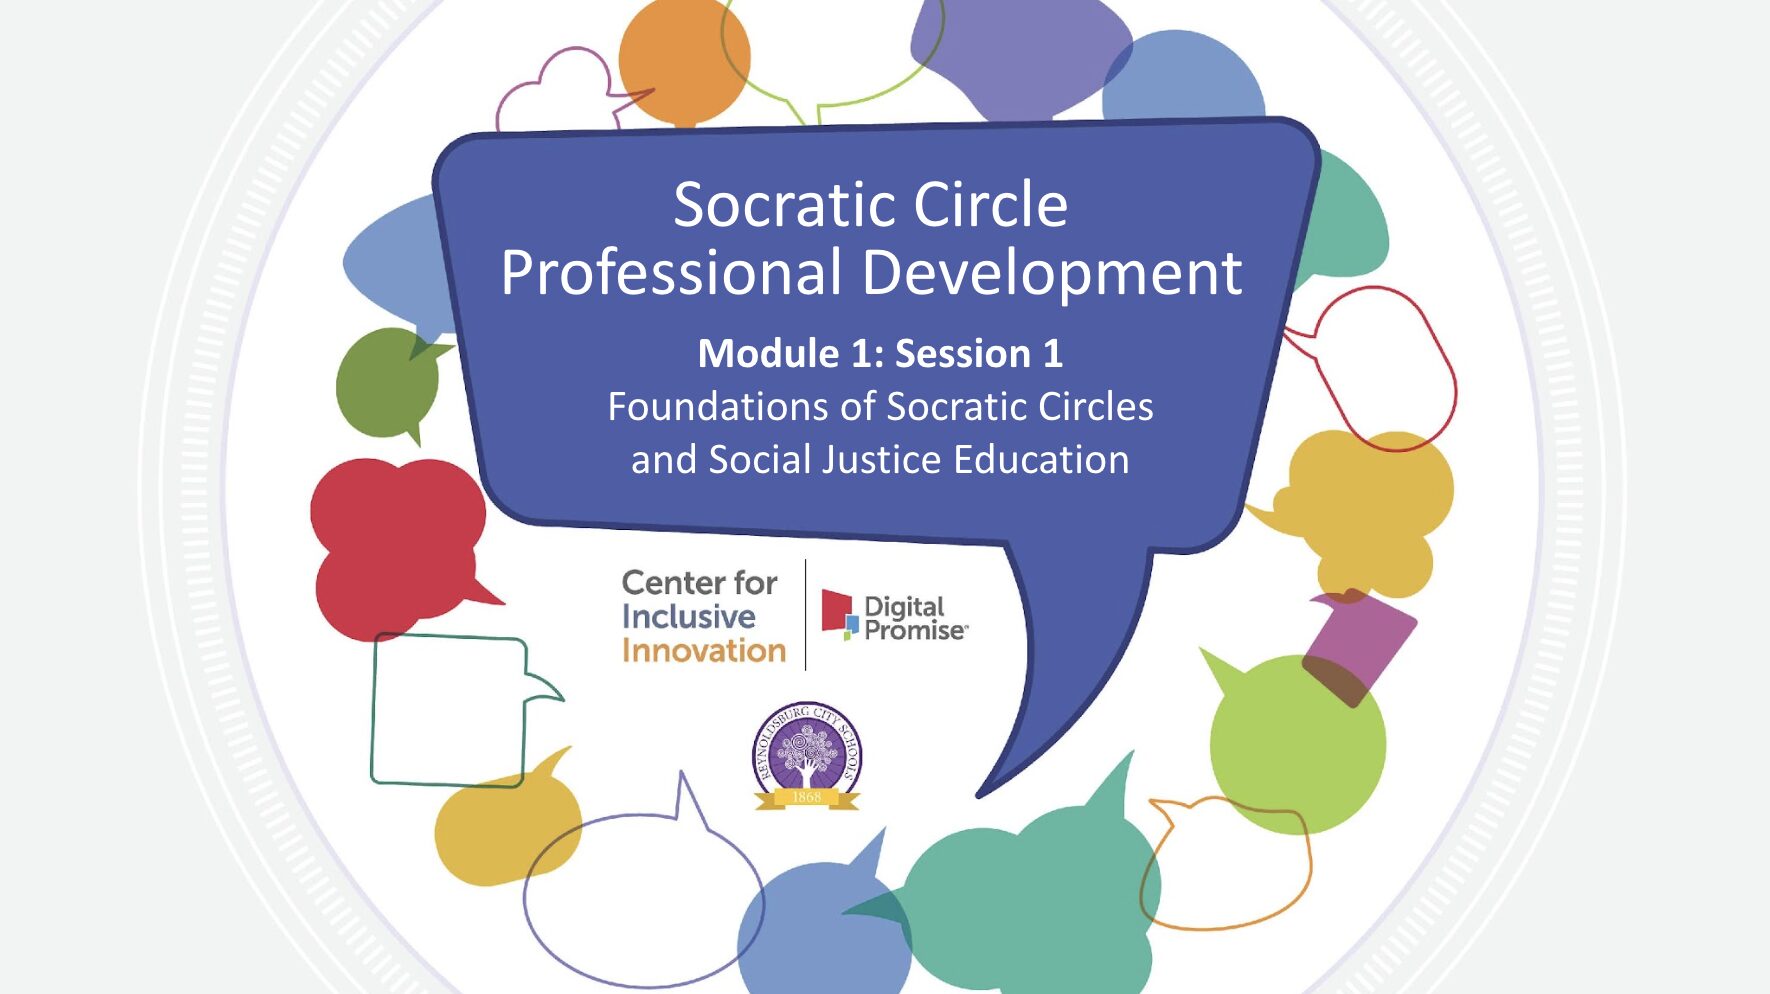 Socratic Circle Professional Development, Module 1: Session 1